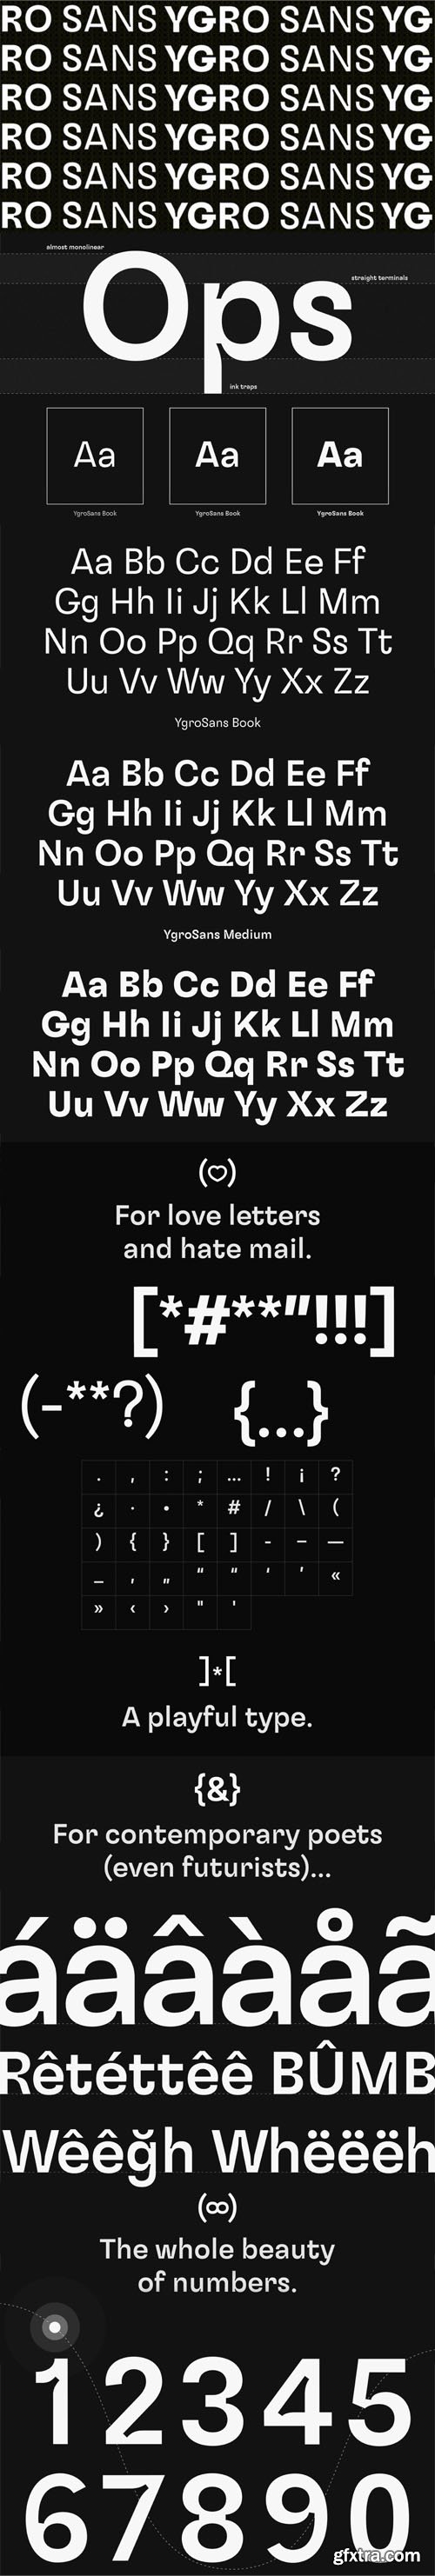 Ygro Sans Serif Font [3-Weights]